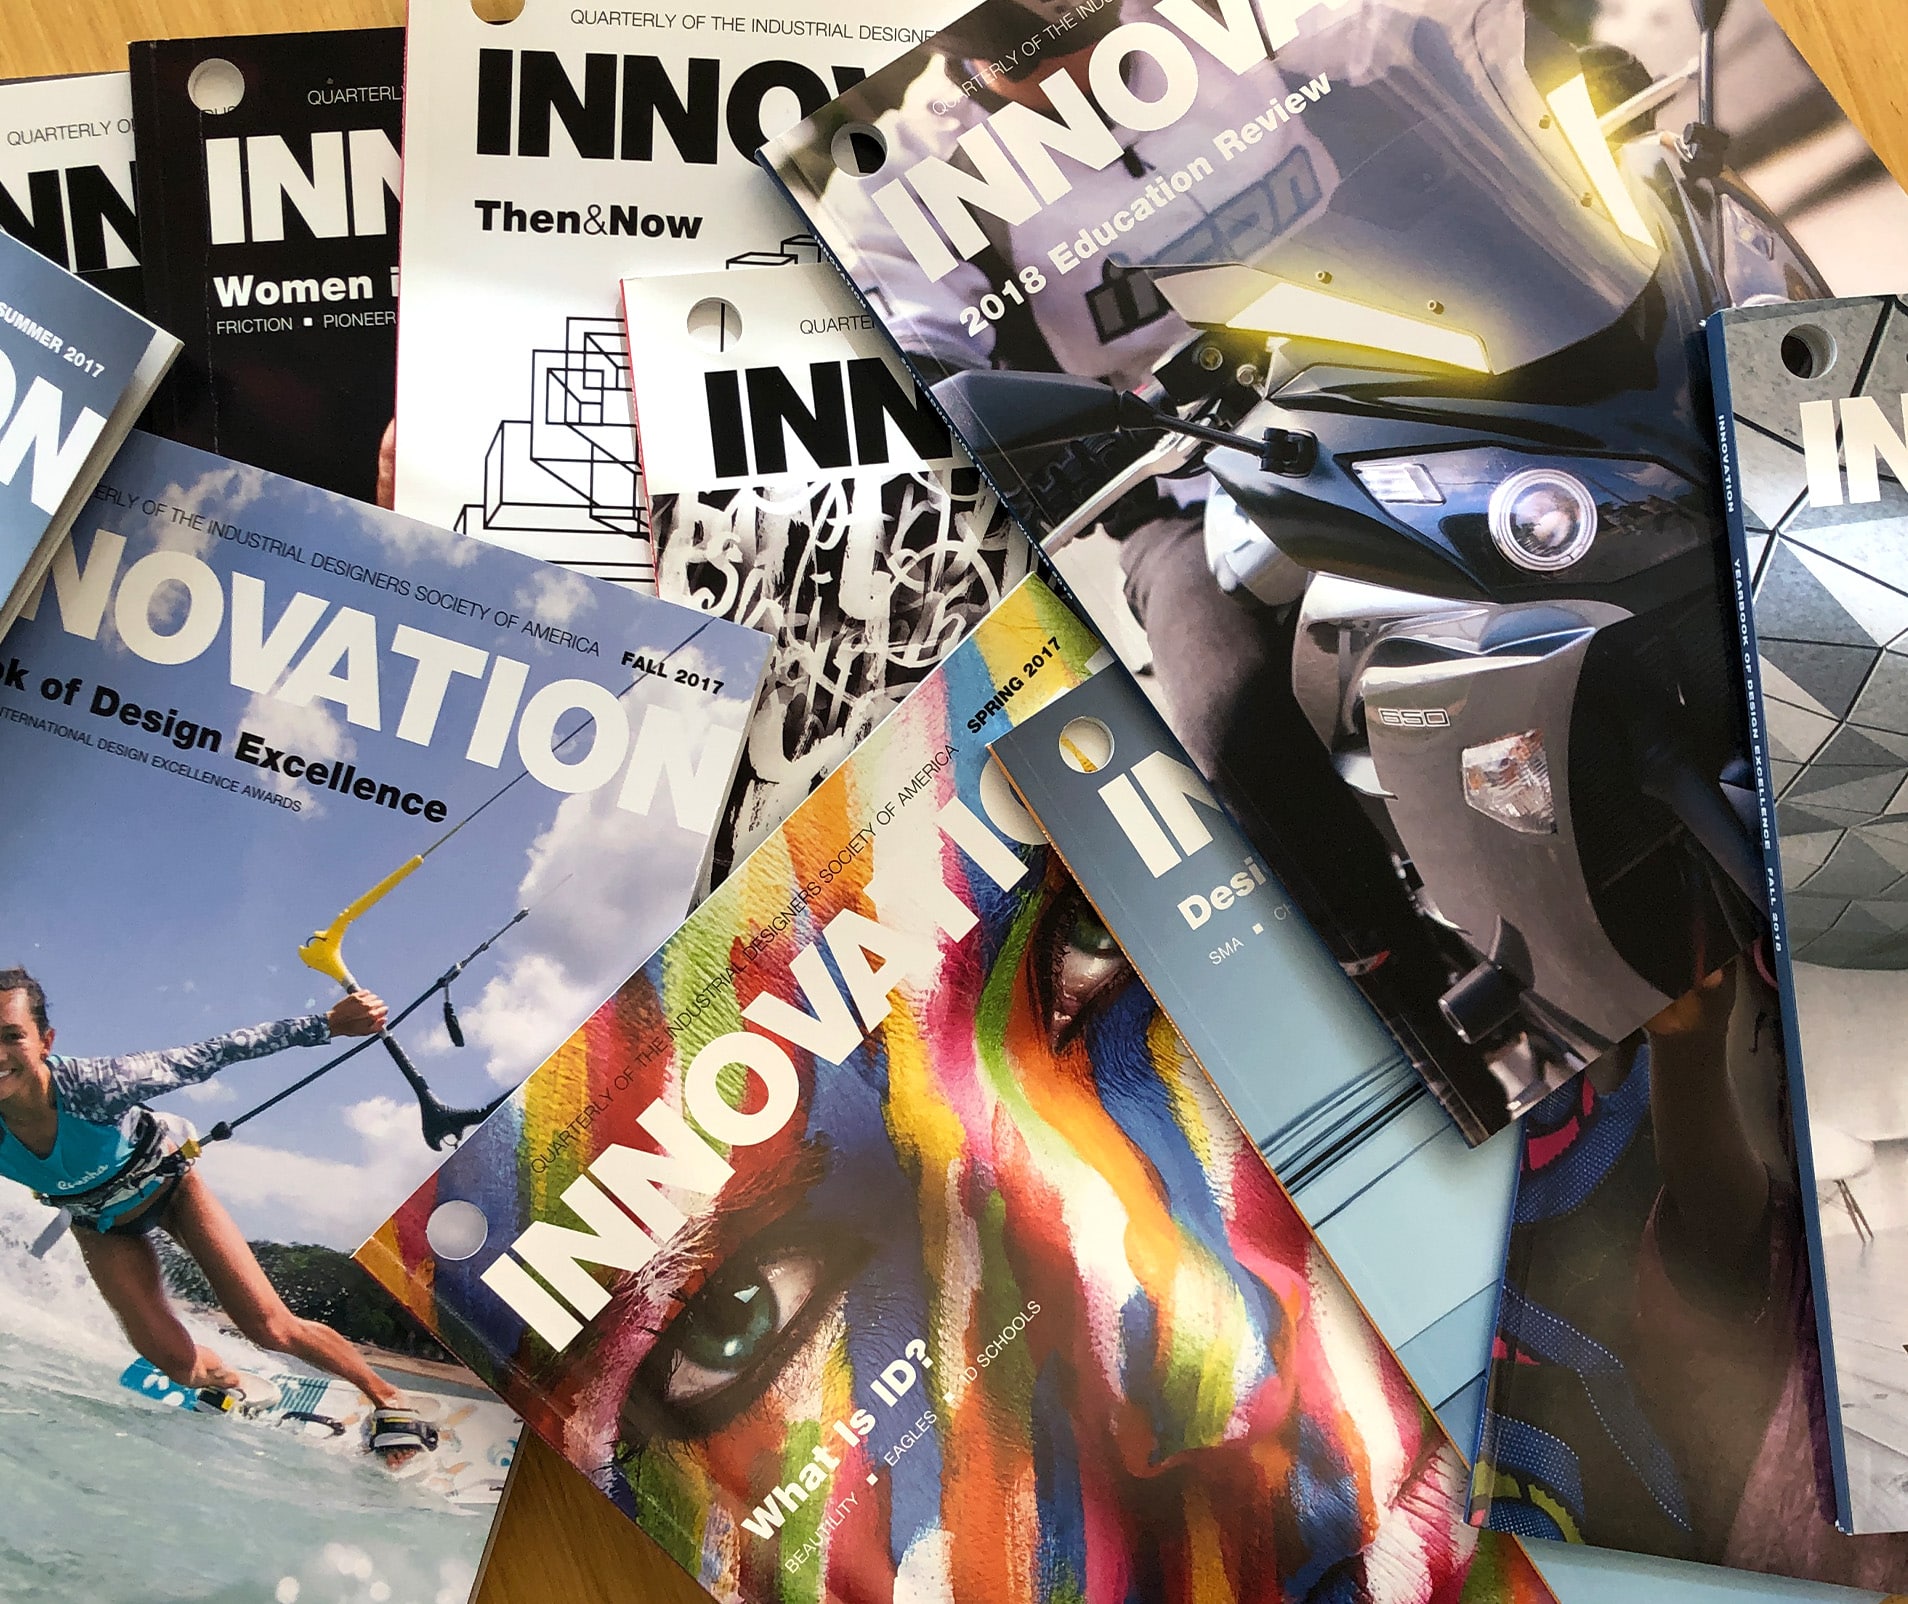 A stack of INNOVATION magazines on a desk